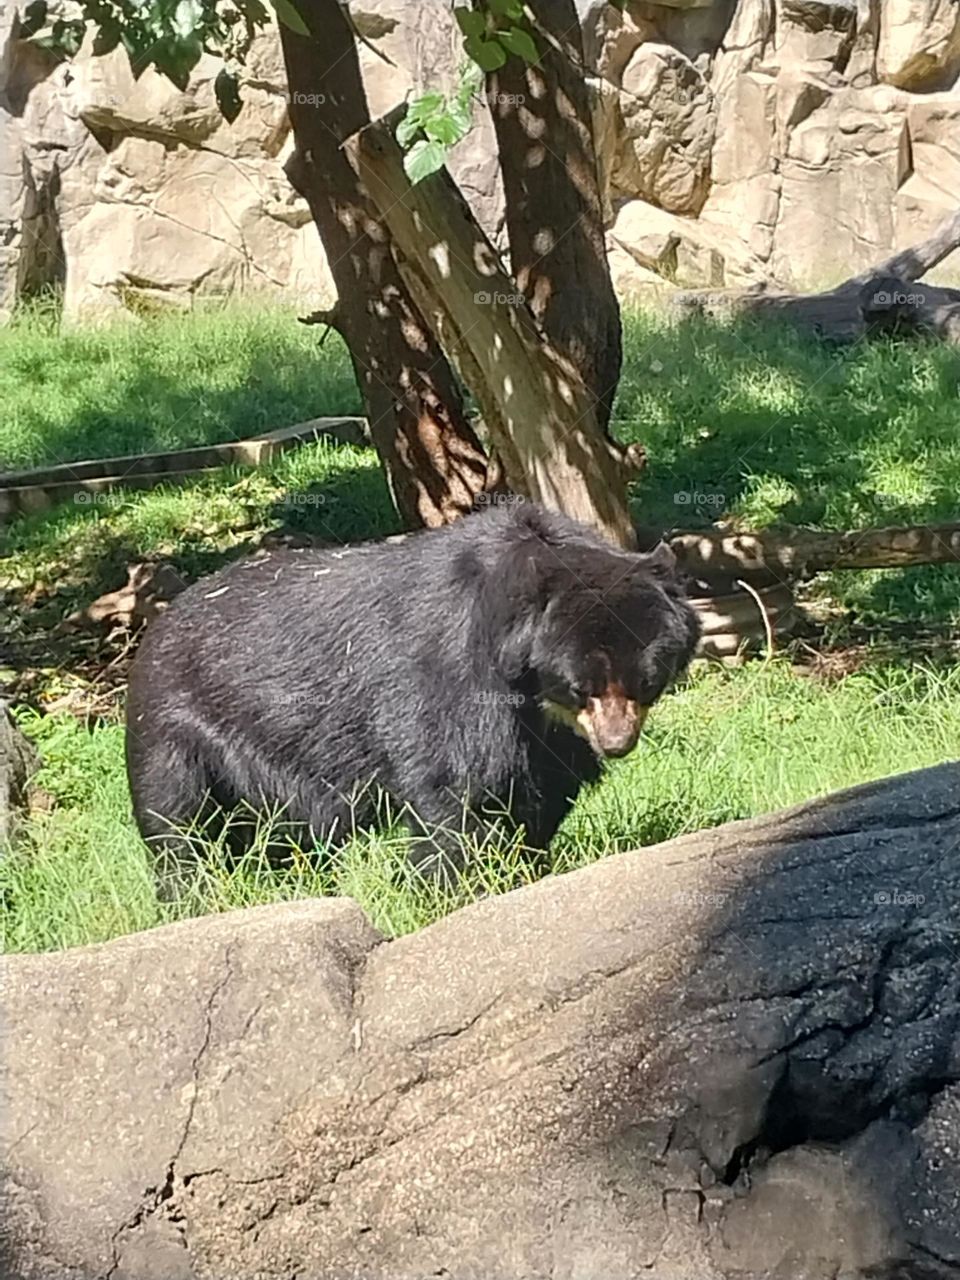 Black bear in enclosure at Smithsonian Zoo in Washington DC